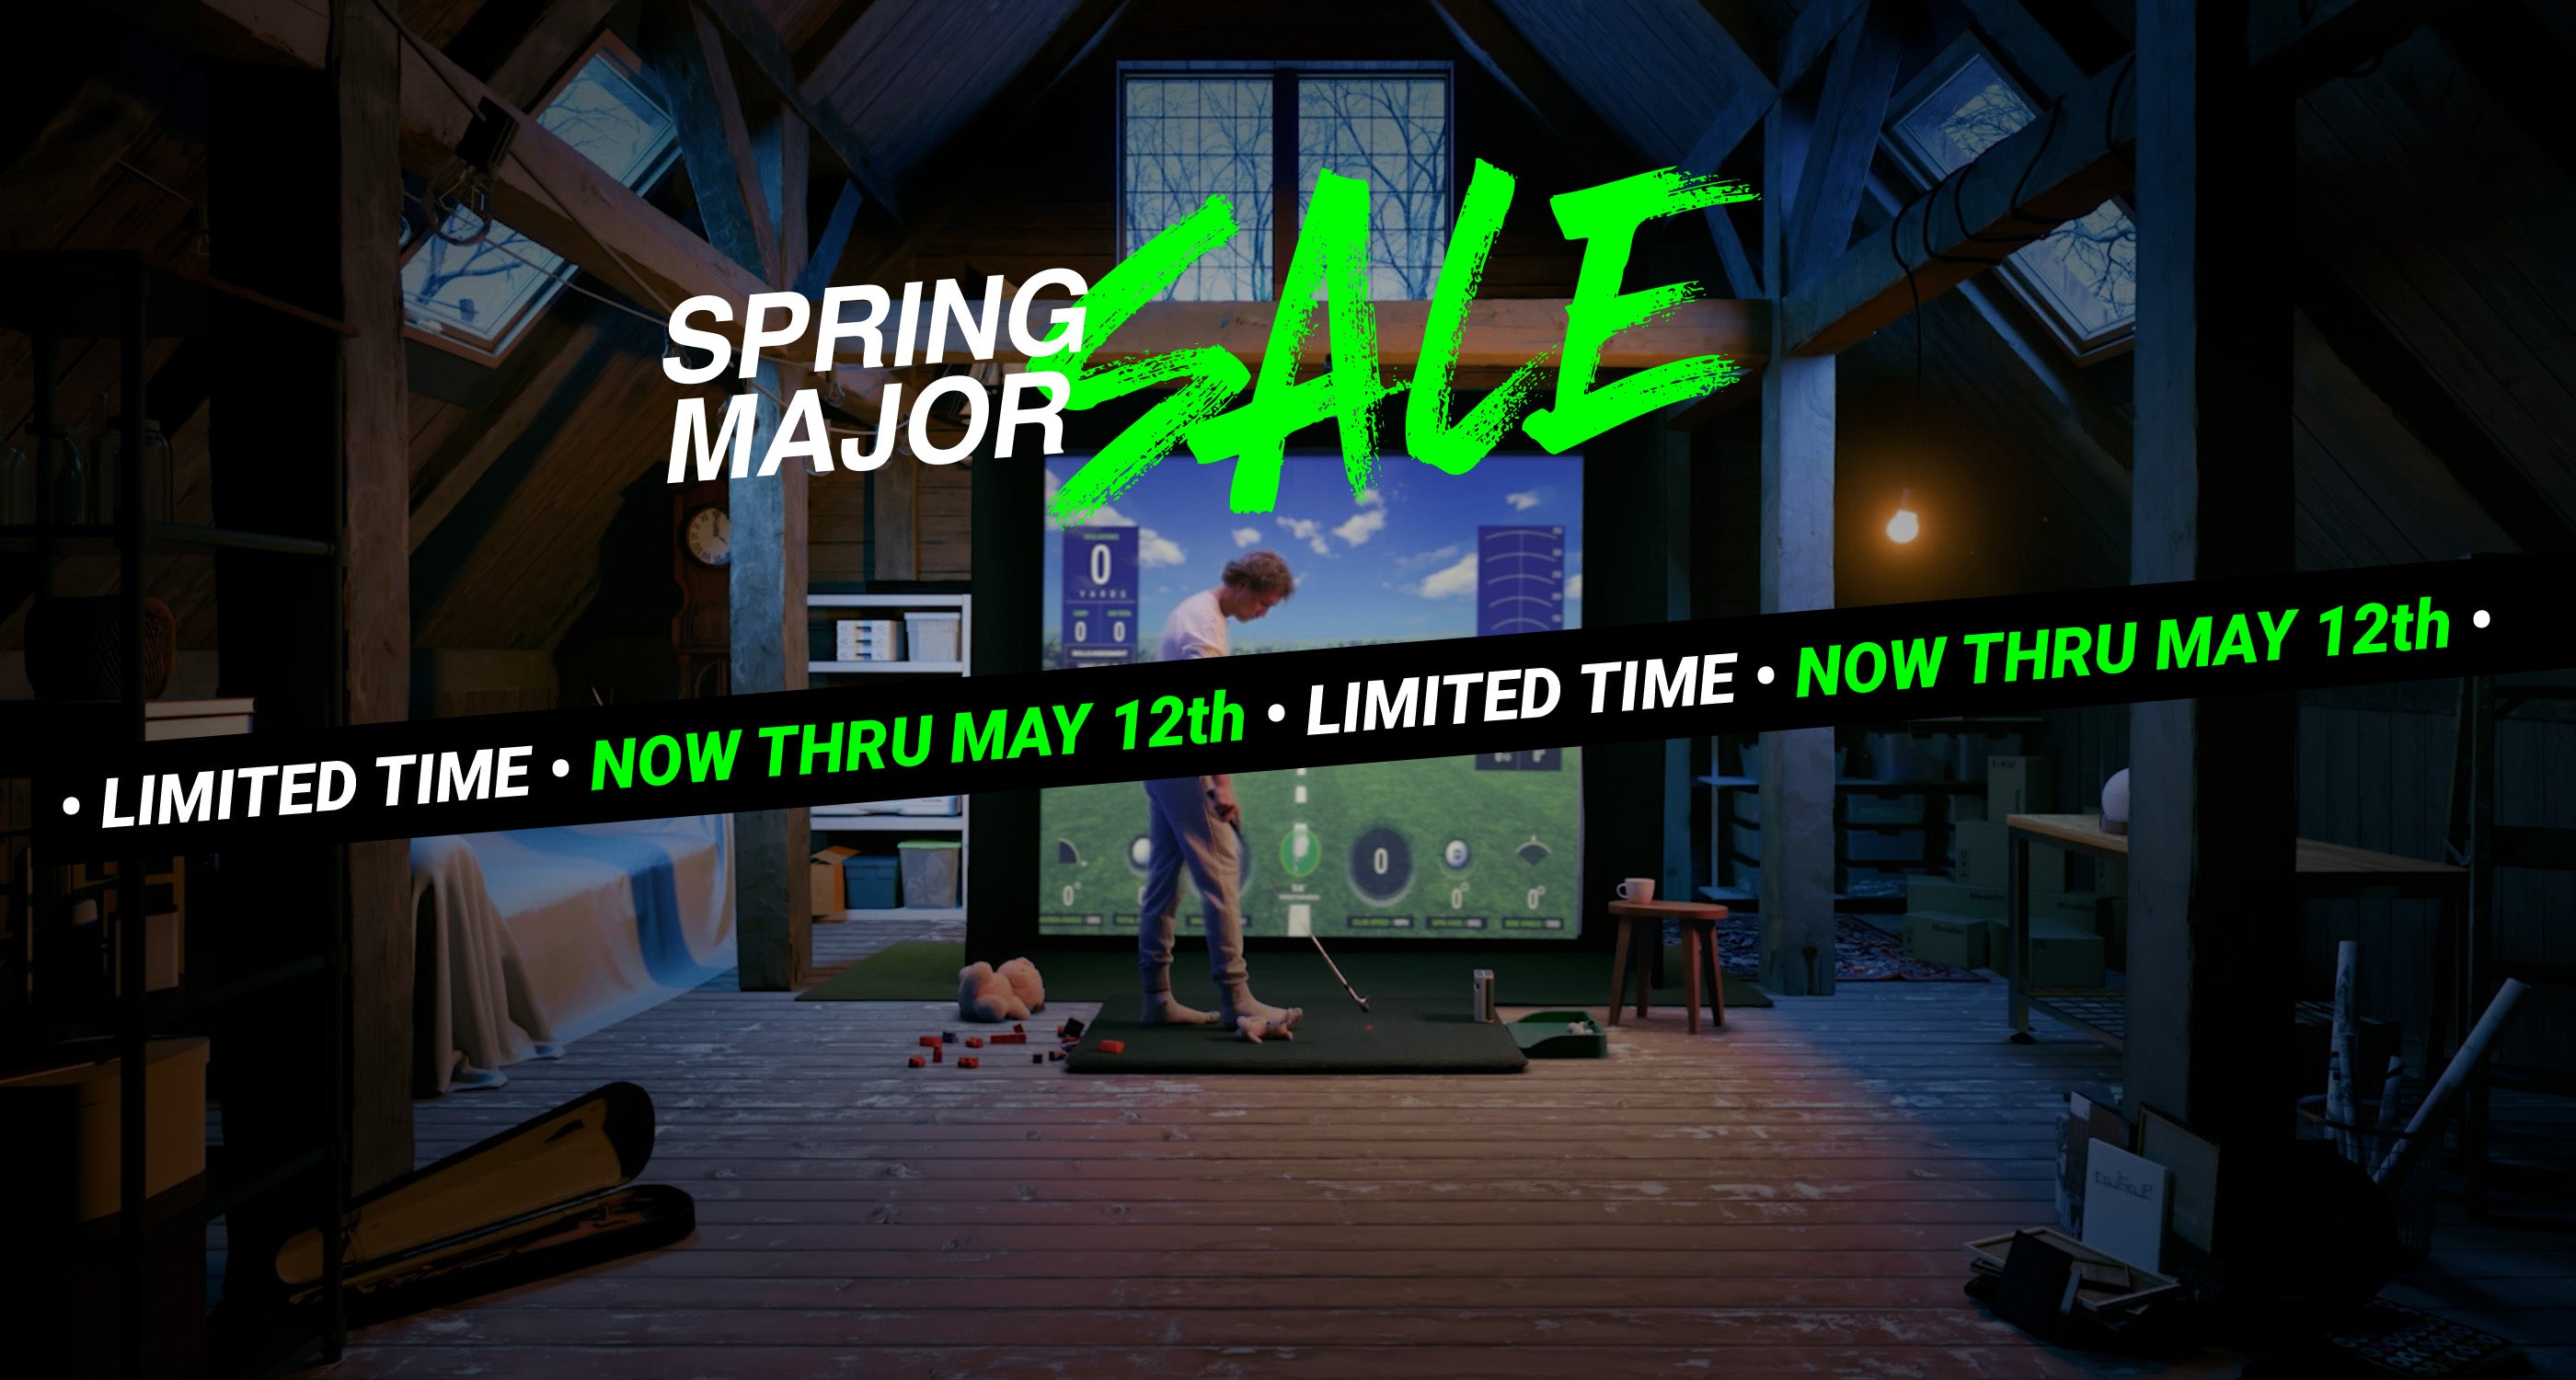 Spring Major Sale at SKYTRAK Golf Simulator Setups on Sale